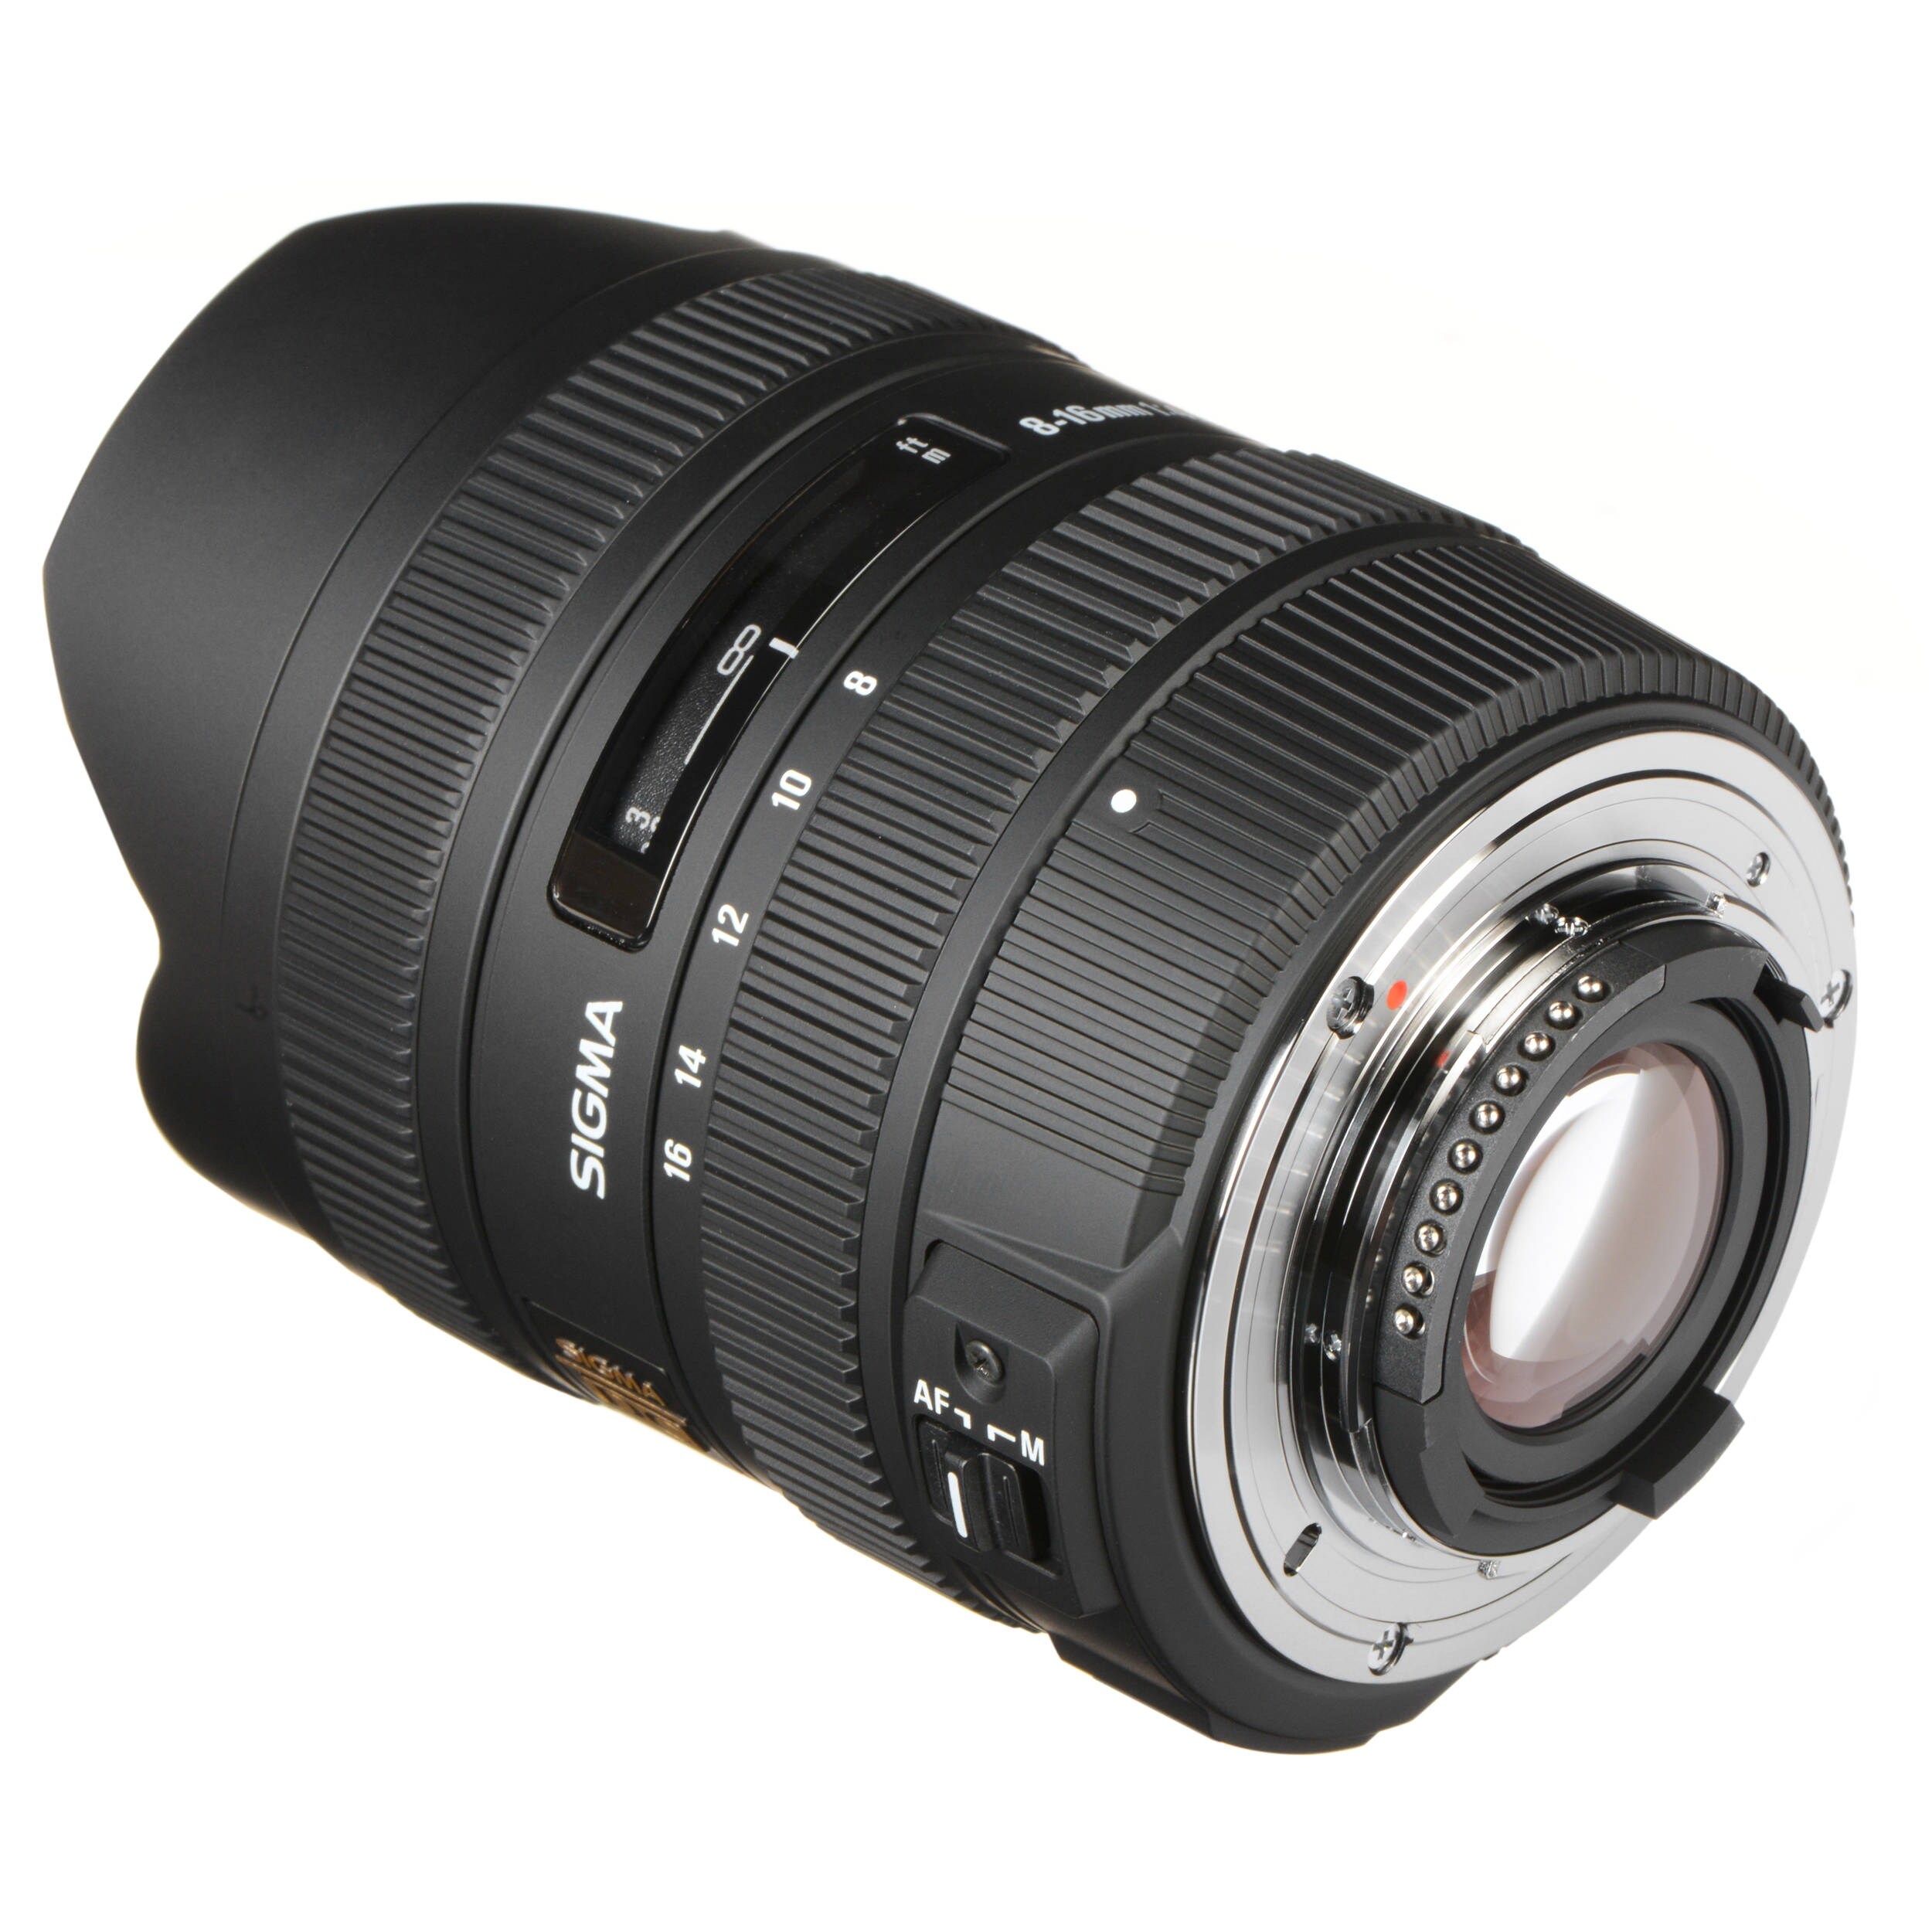 Sigma 8 16mm F 4 5 5 6 Dc Hsm Ultra Wide Zoom Lens For Select Nikon Dslrs International Model Overstock